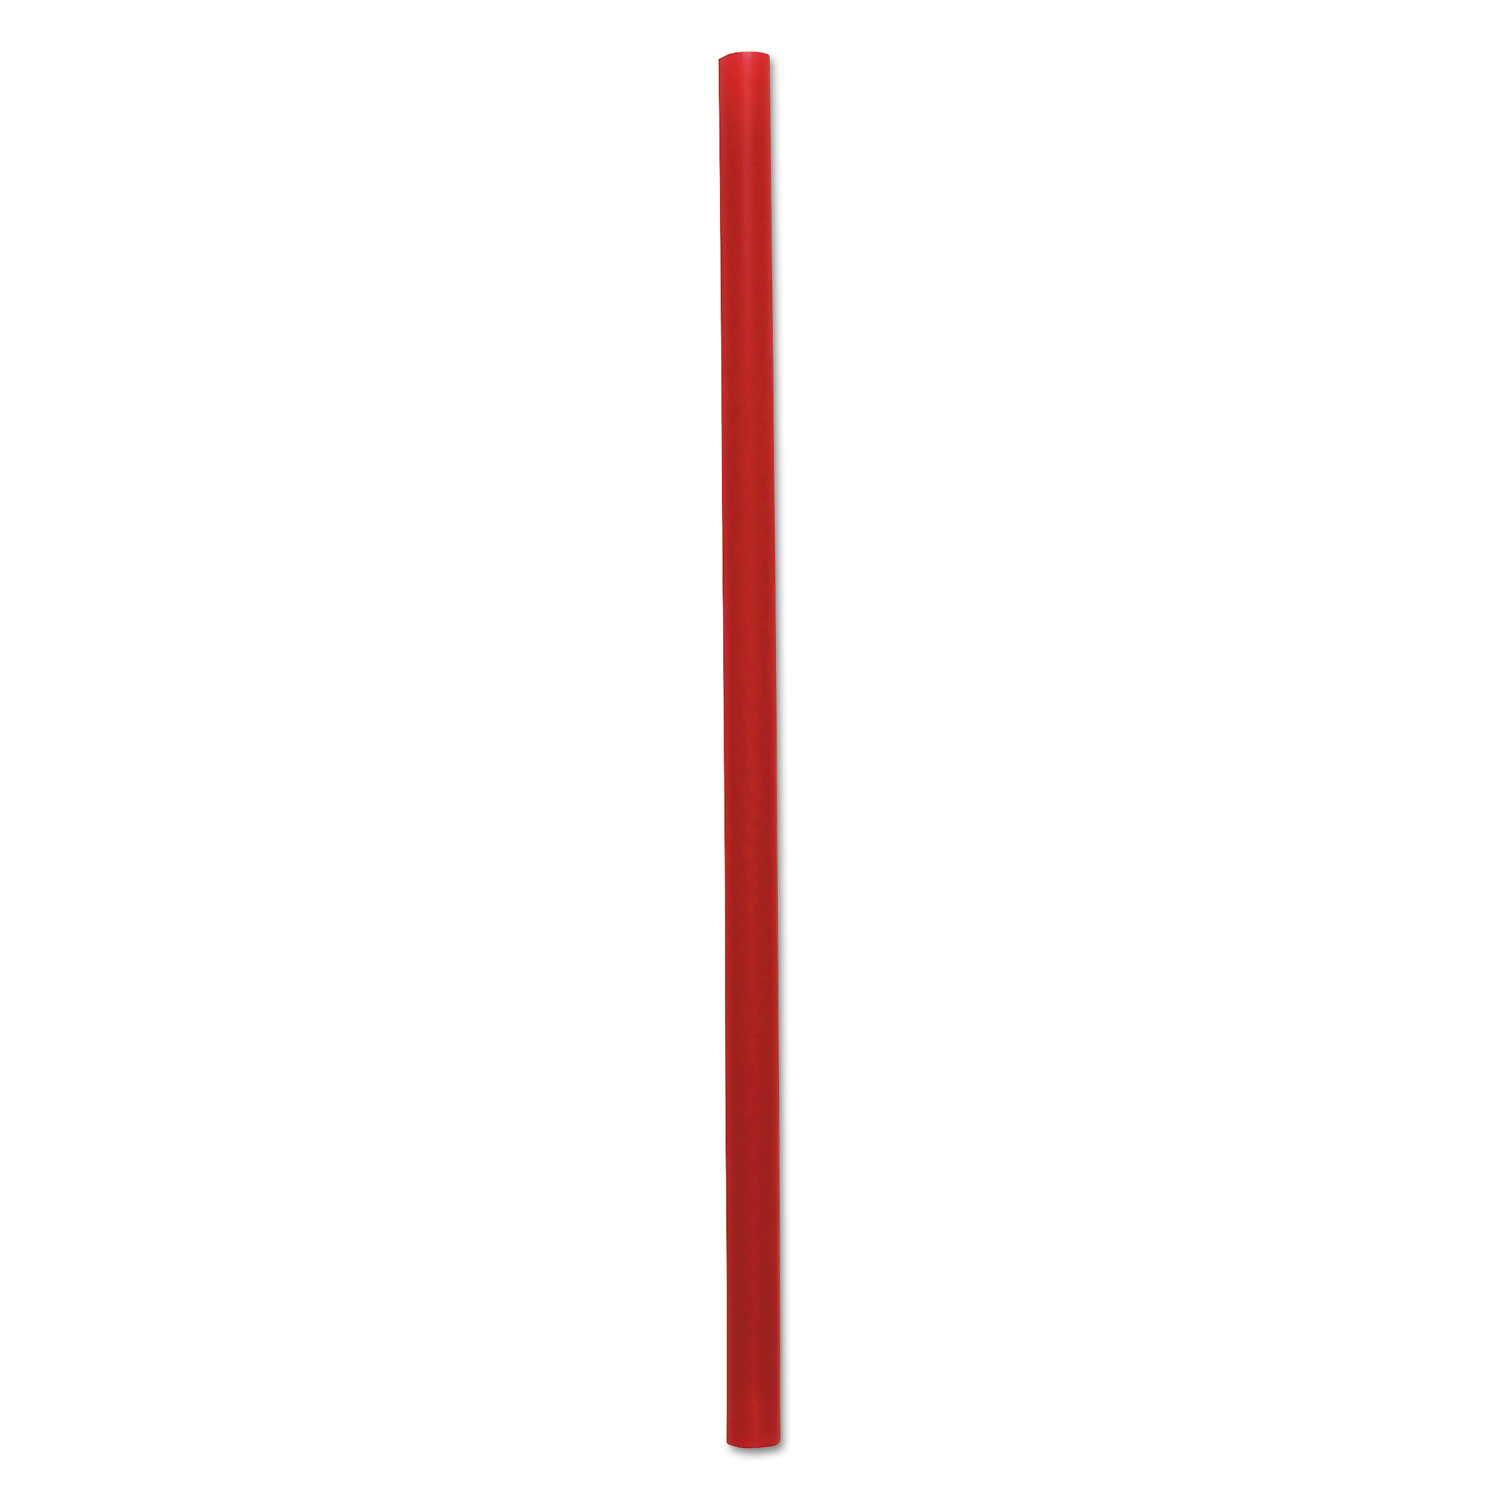 Wrapped Giant Straws, 7 3/4, Red, 2000/Carton